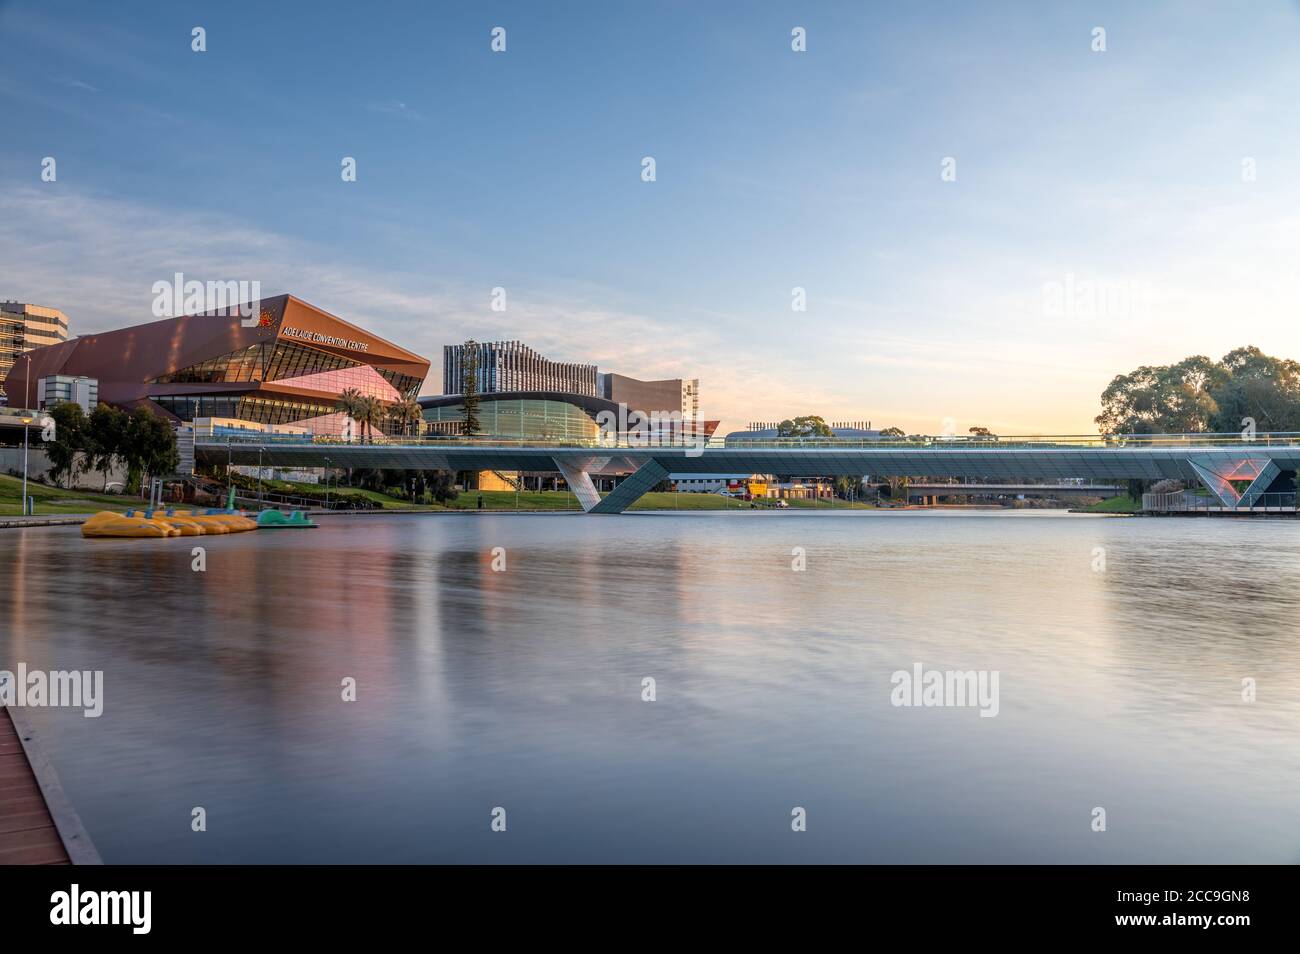 Adelaide, South Australia - Torrens Riverbank Precinct at Sunset Stockfoto